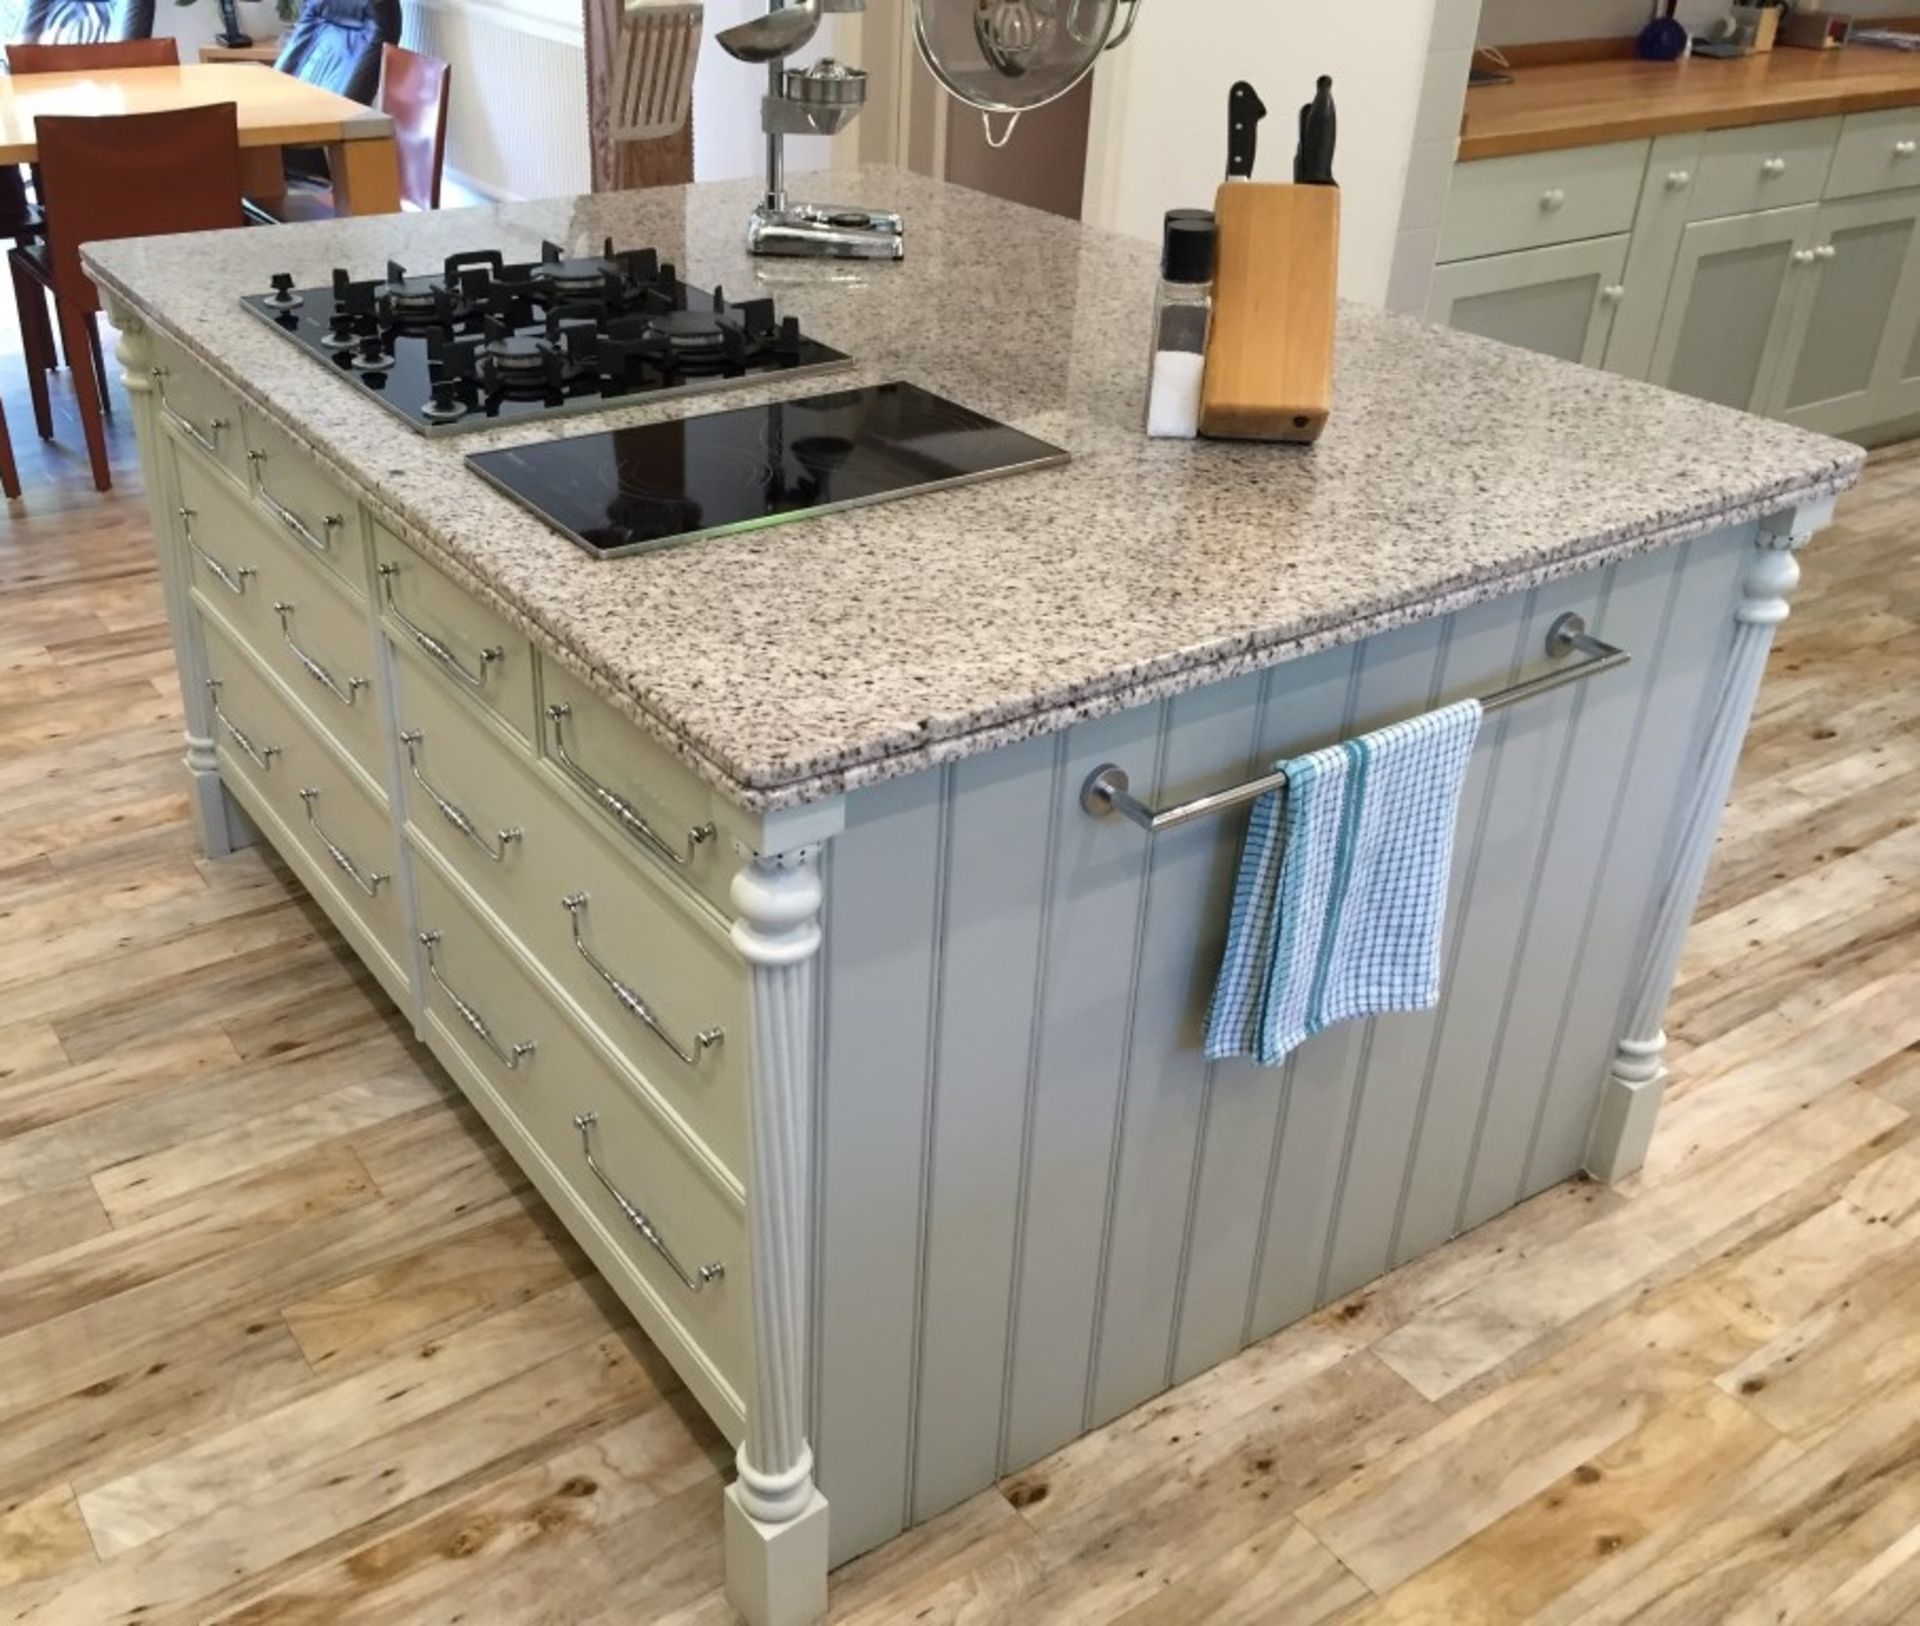 1 x Mark Wilkinson Designer kitchen With Miele Appliances & Granite Worksurfaces - No VAT - Image 5 of 65